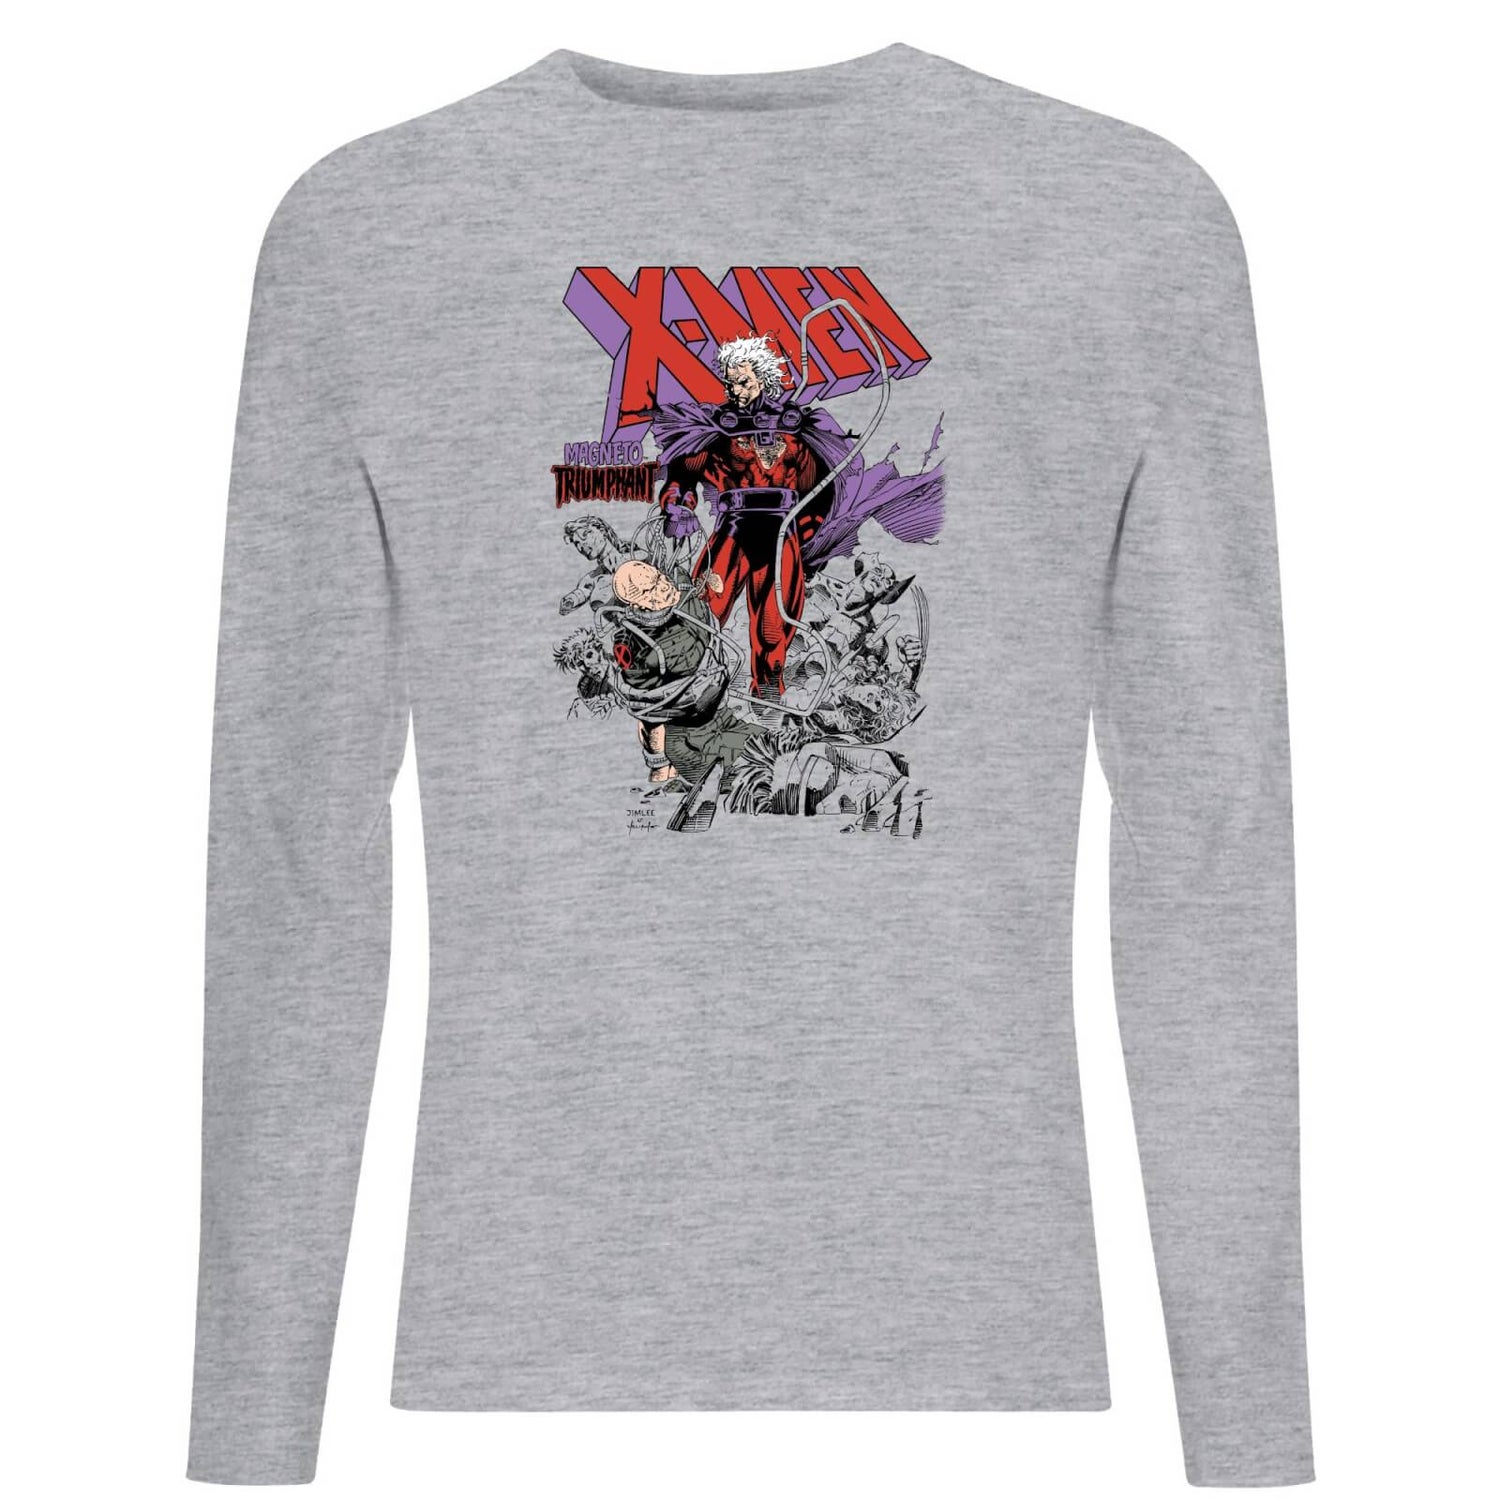 X-Men Magneto Triumphant Long Sleeve T-Shirt - Grey